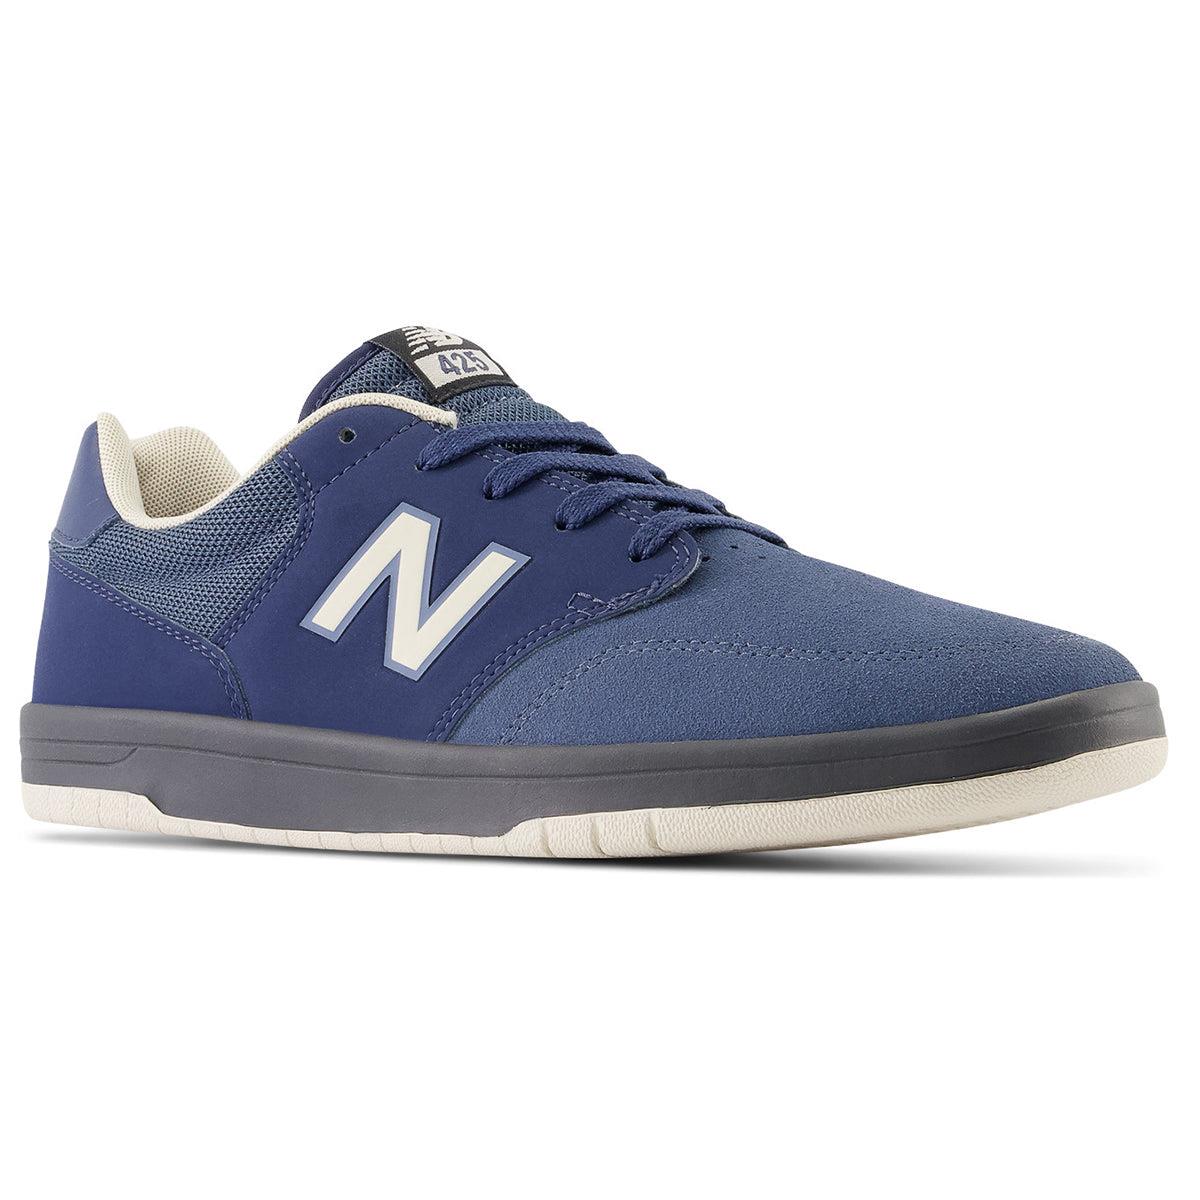 New Balance 425 - Navy Blue/black